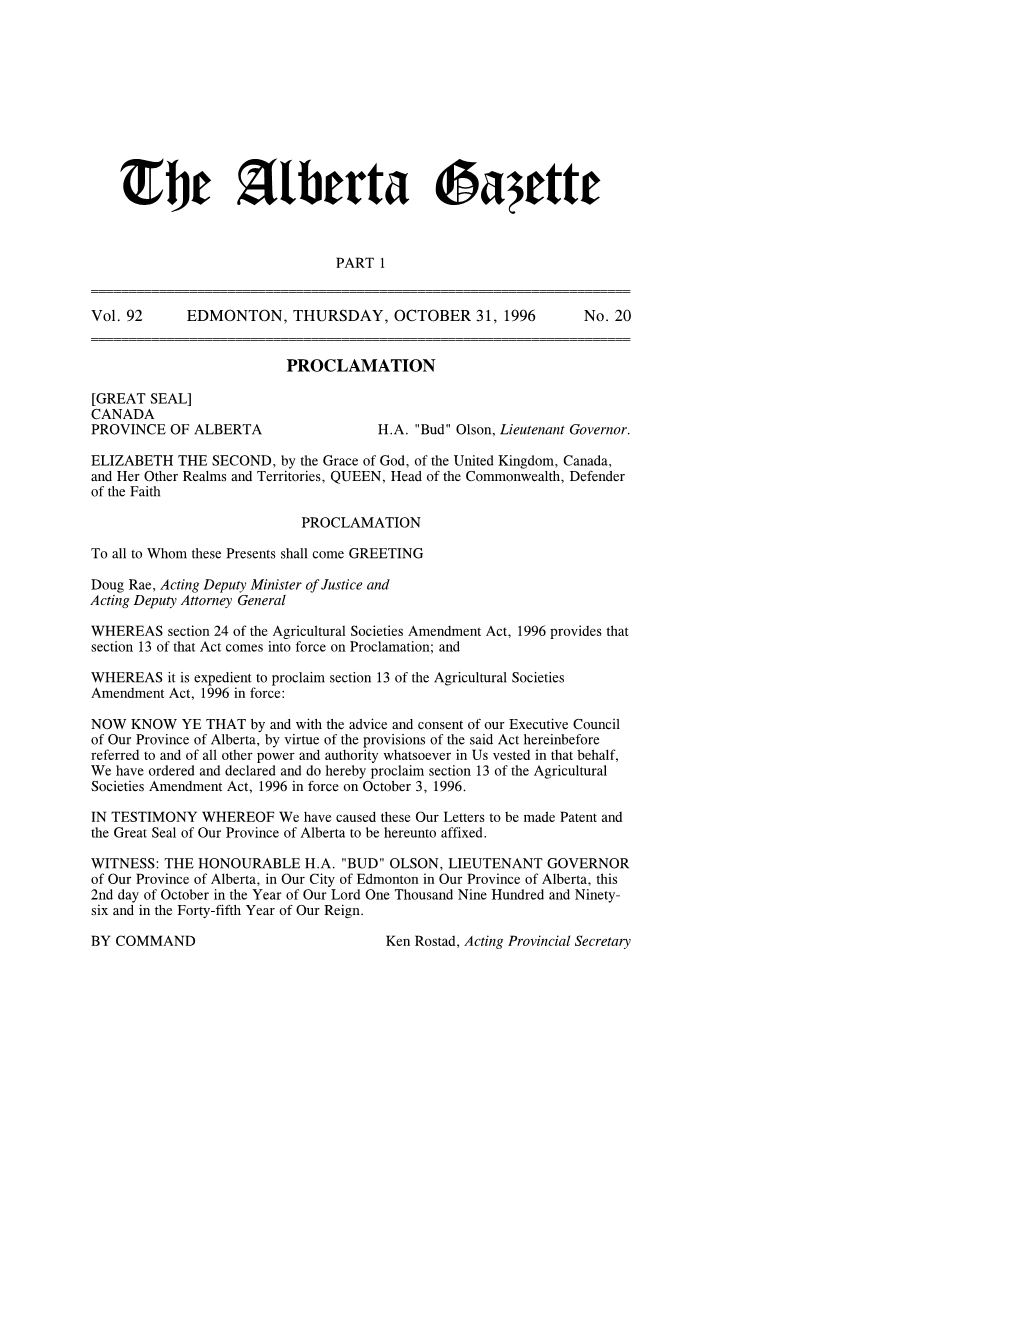 The Alberta Gazette, Part I, October 31, 1996